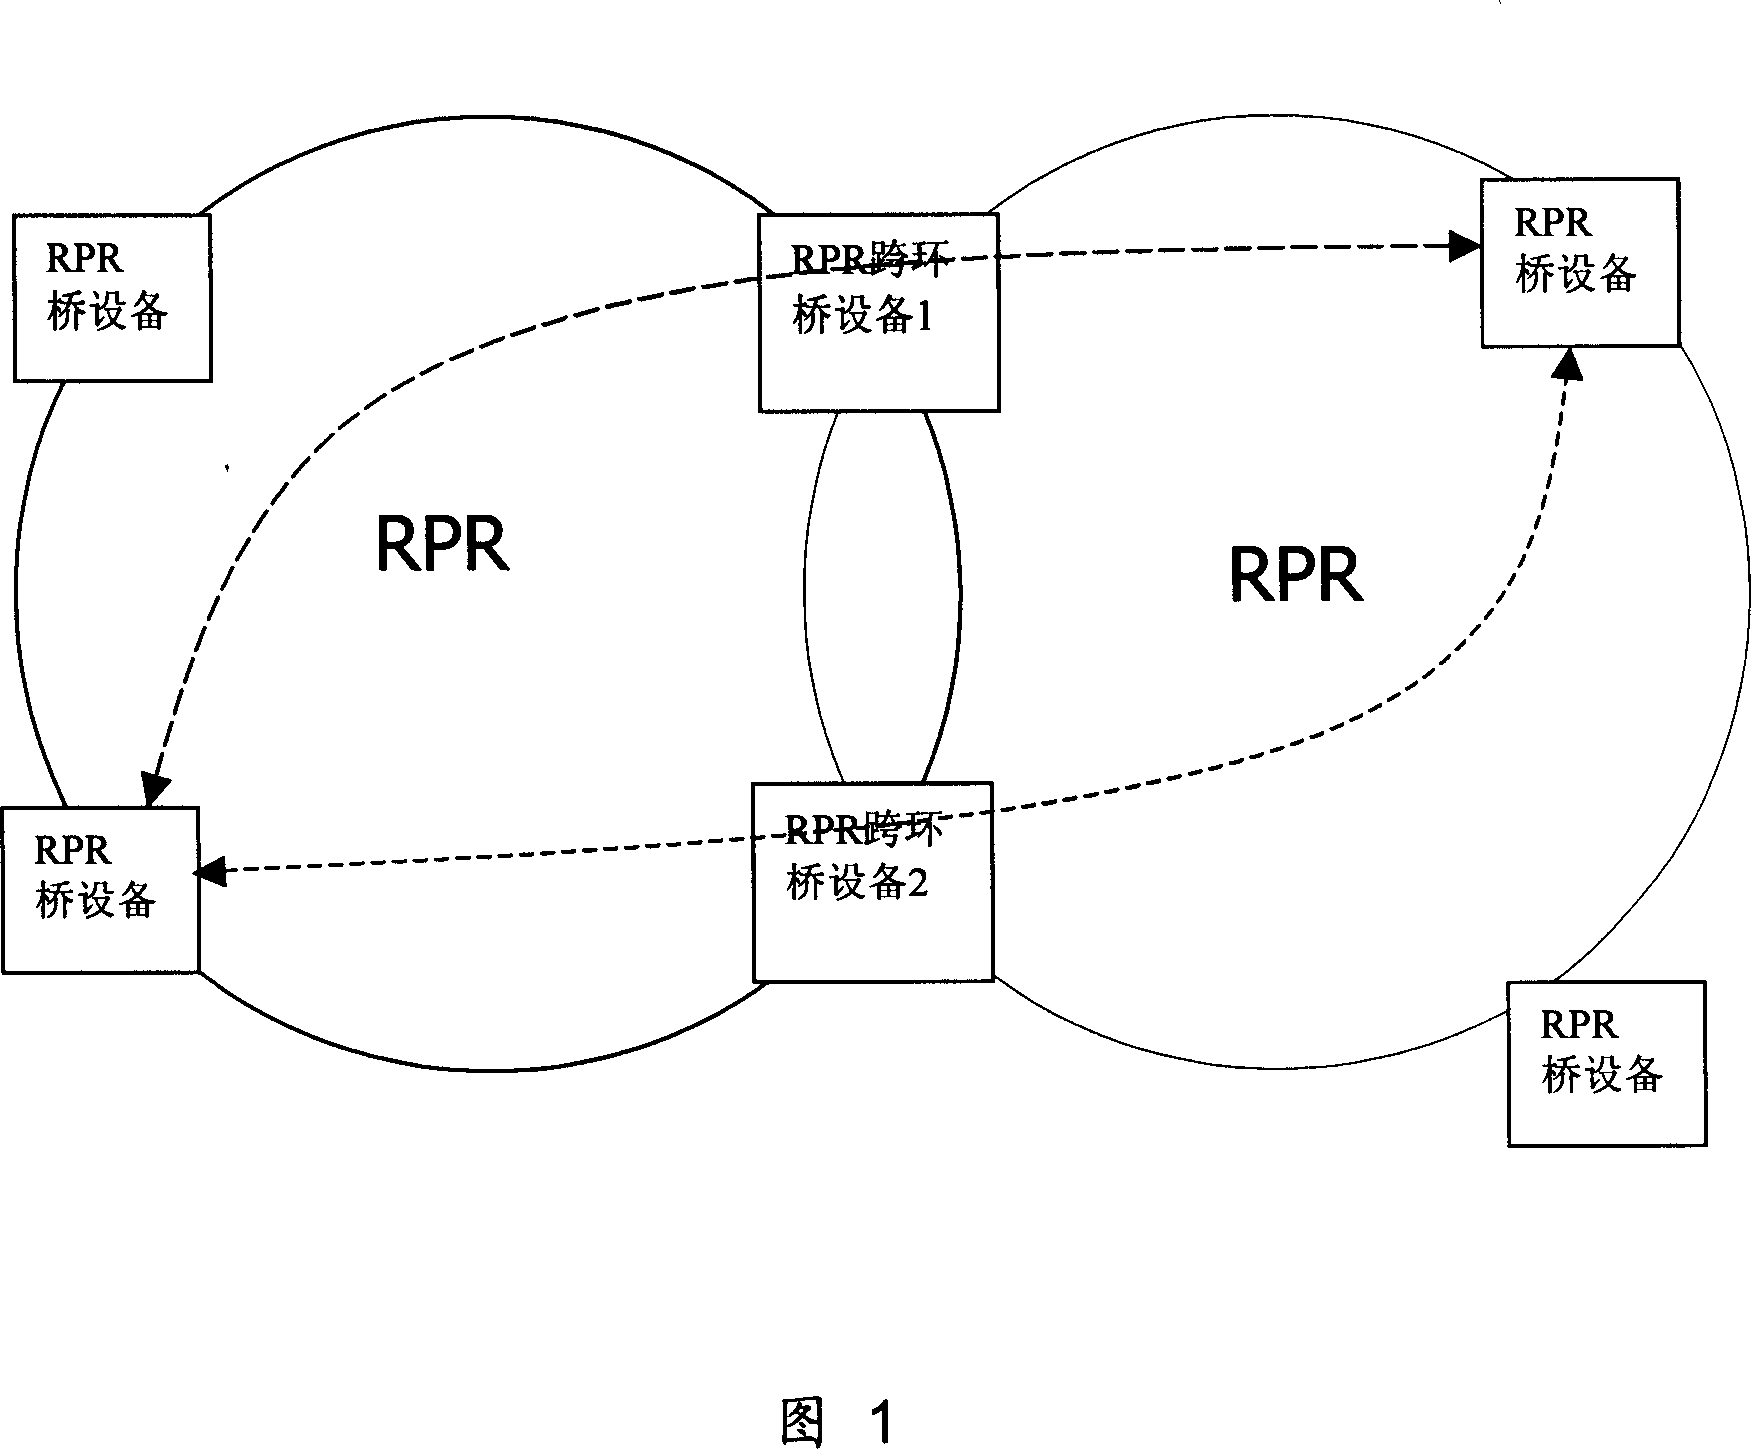 Method for protecting RPR bridge redundancy